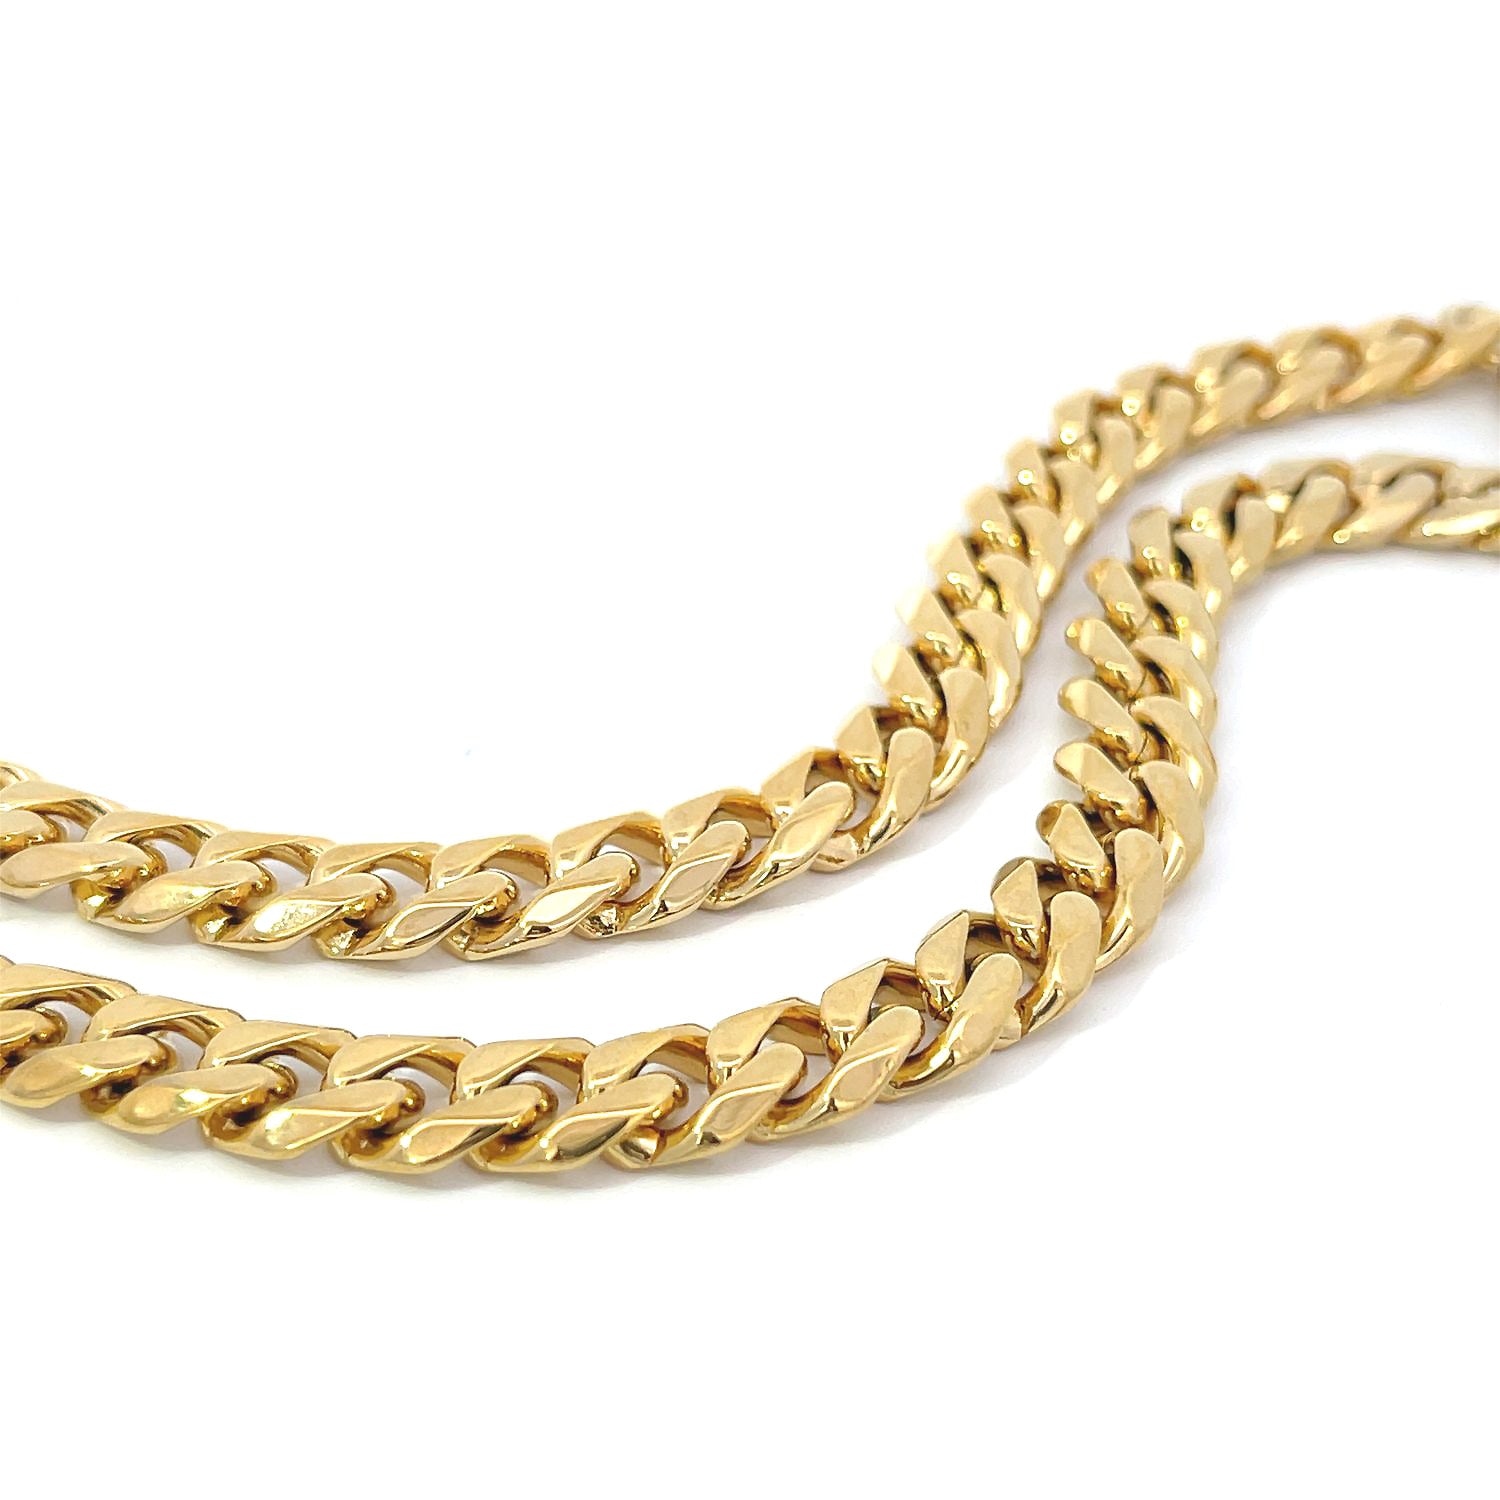 Explore RICKI Bold Chain Necklace Collection by Gosia Orlowska